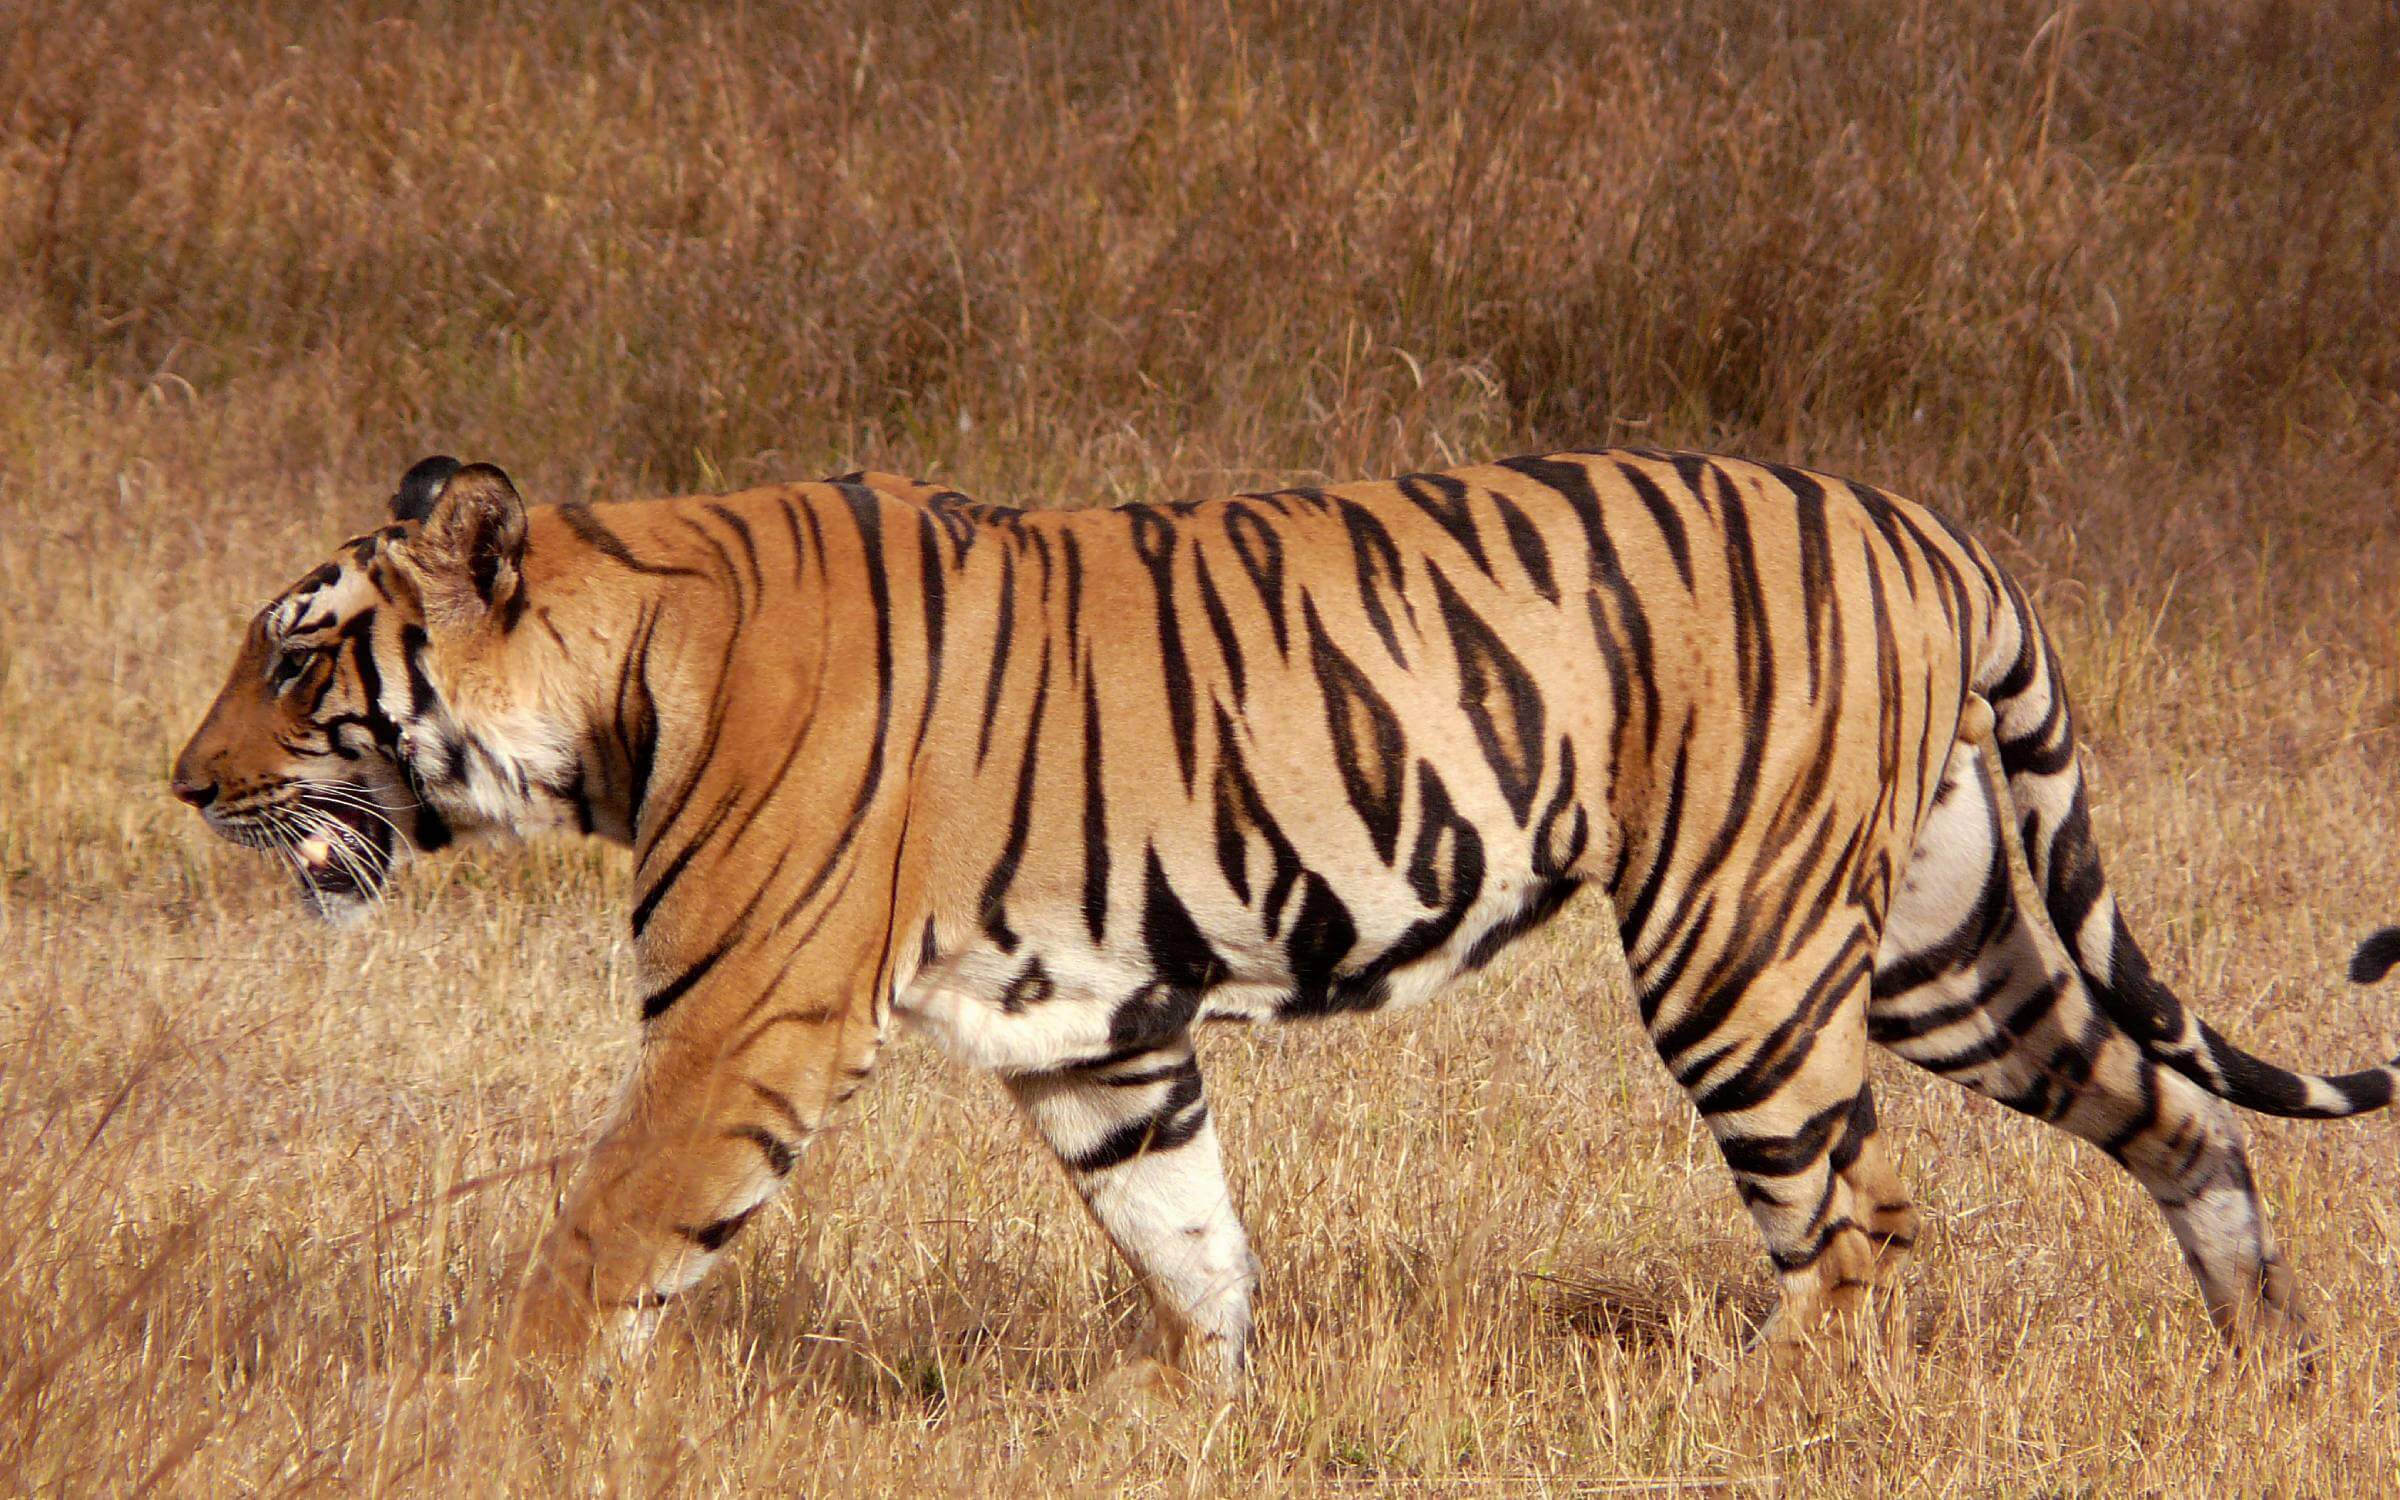 Bandhavgarh National Park Tiger